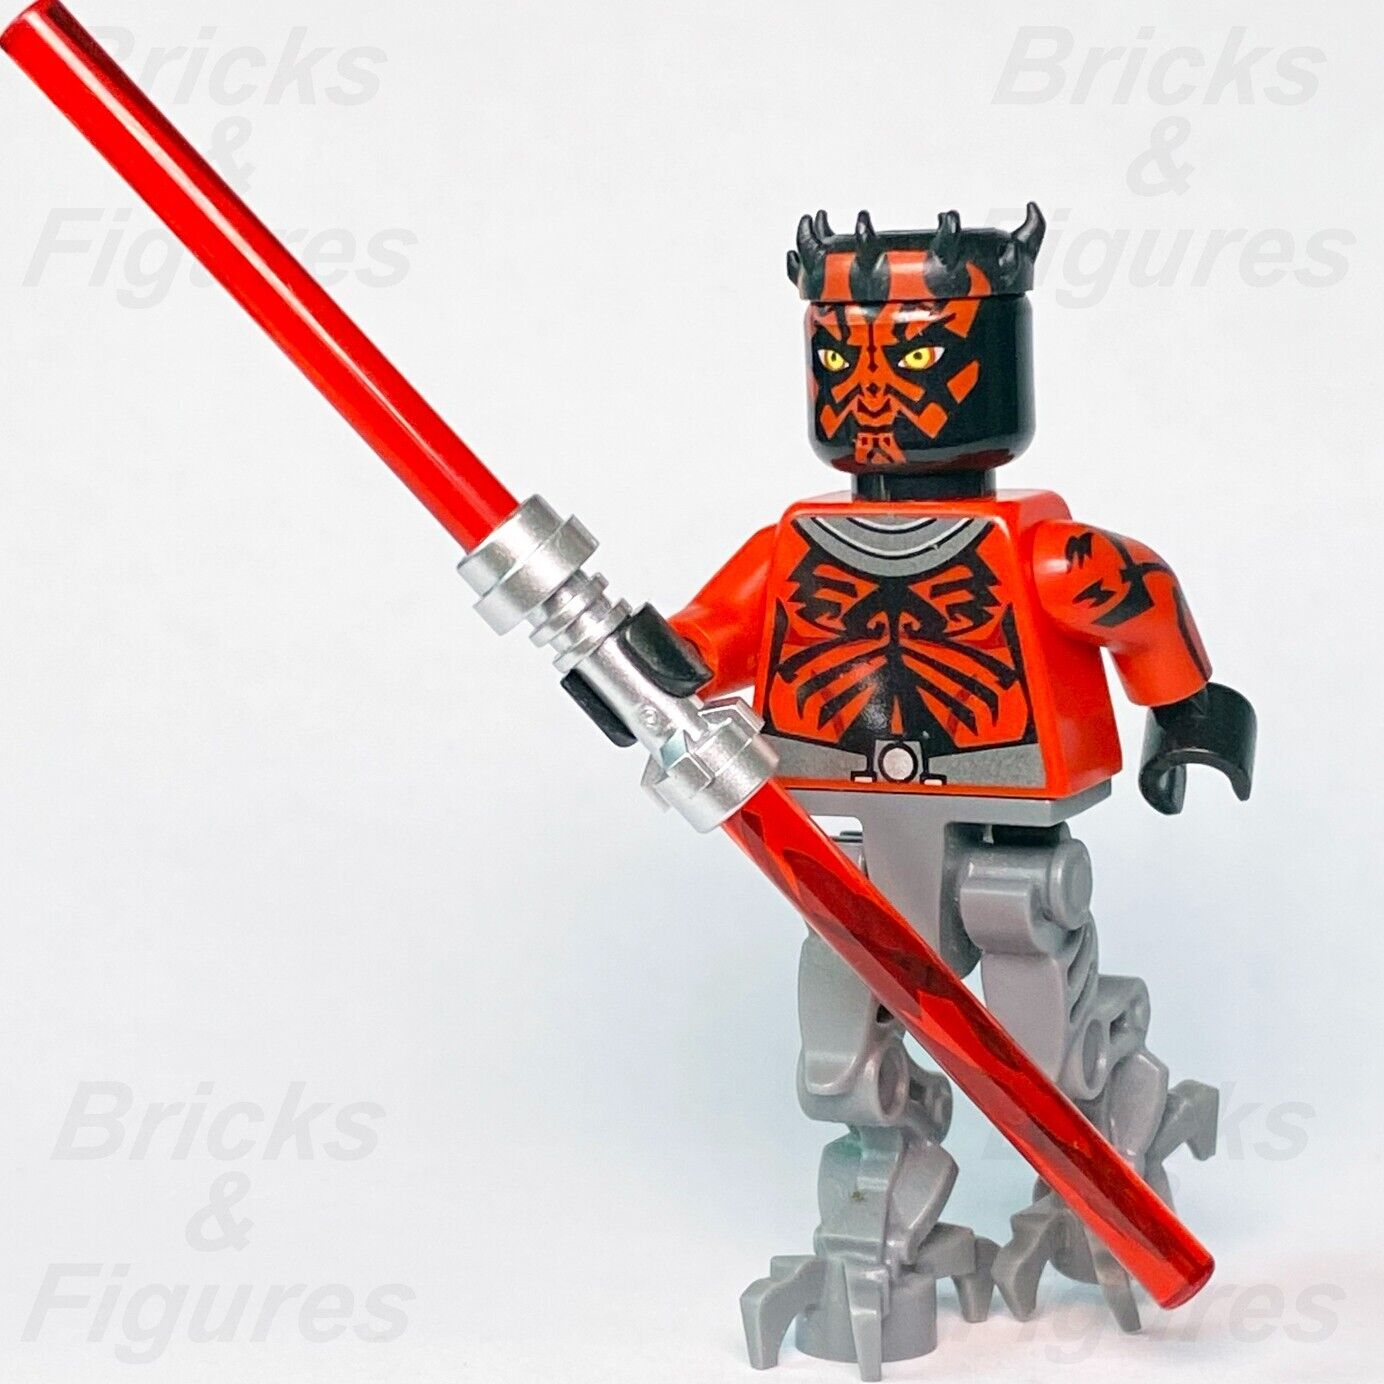 LEGO Star Wars Darth Maul Minifigure with Mechanical Legs Sith Lord 75022 sw0493